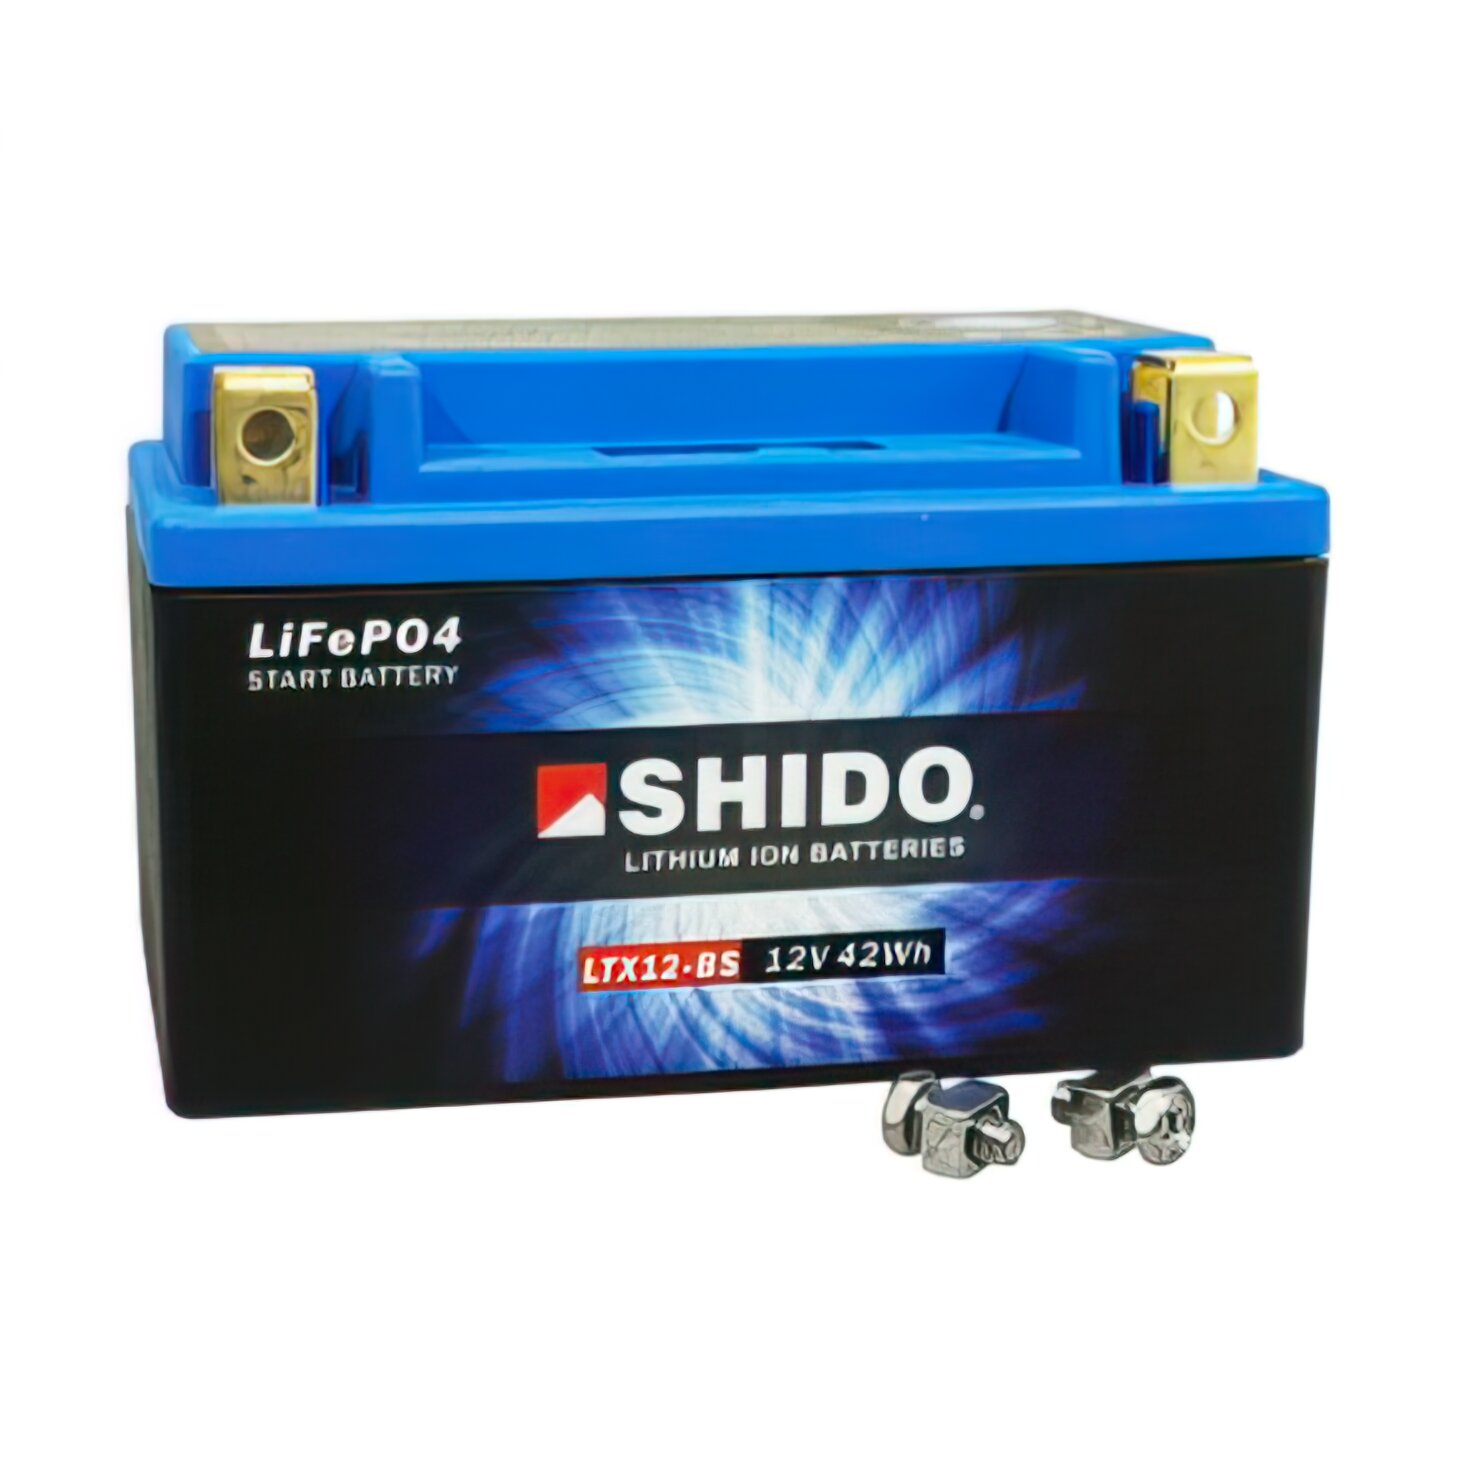 Batterie BS Battery Lithium BSLI-10 12V - 6Ah kaufen